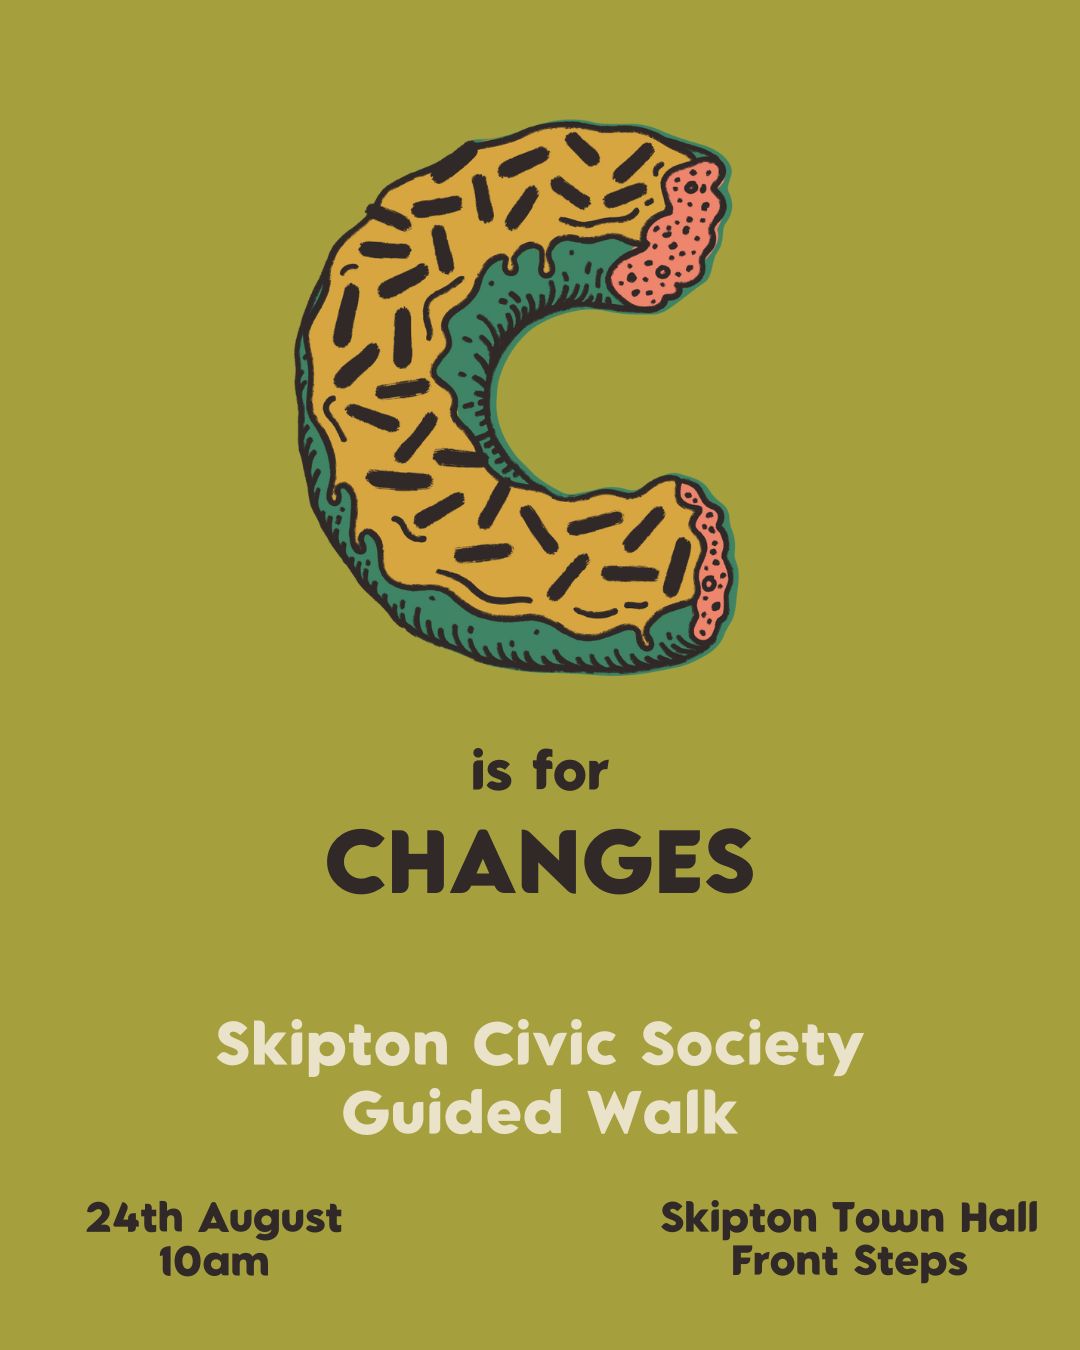 Join Skipton Civic Society tomorrow at 10am as they take